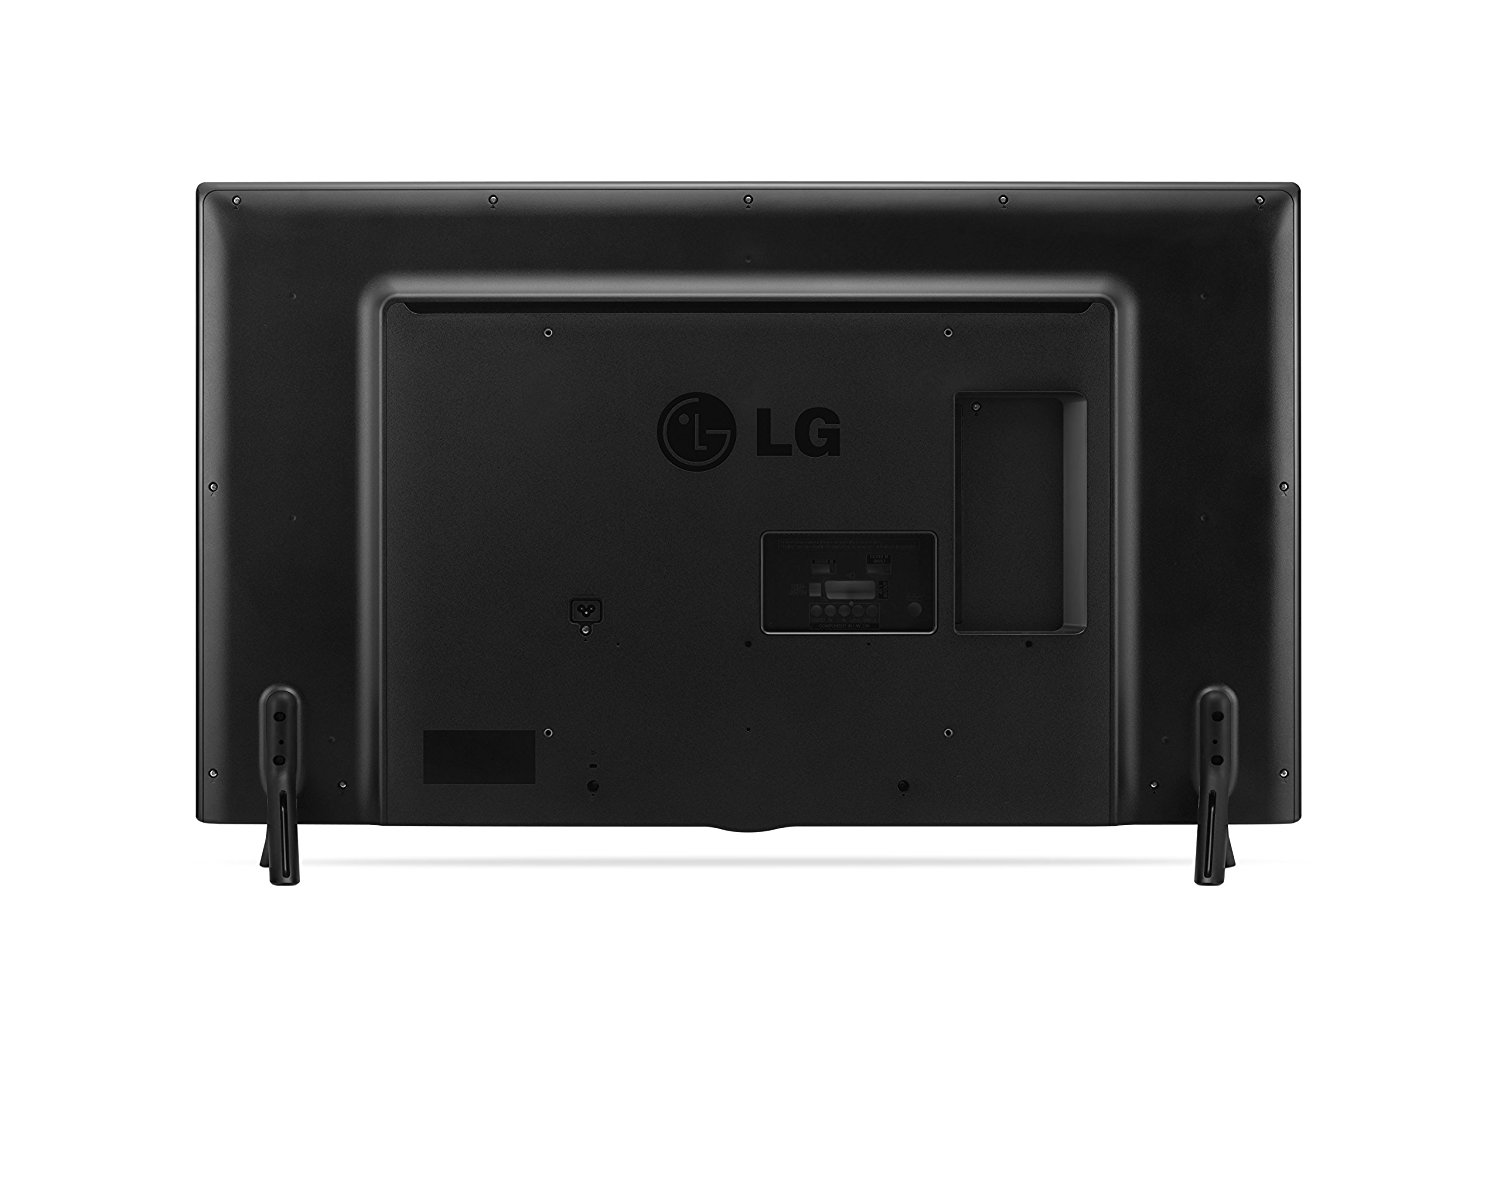 Lg Electronics 42lf5800 42 Inch 1080p Smart Led Tv 2015 Model N3 Free Image Download